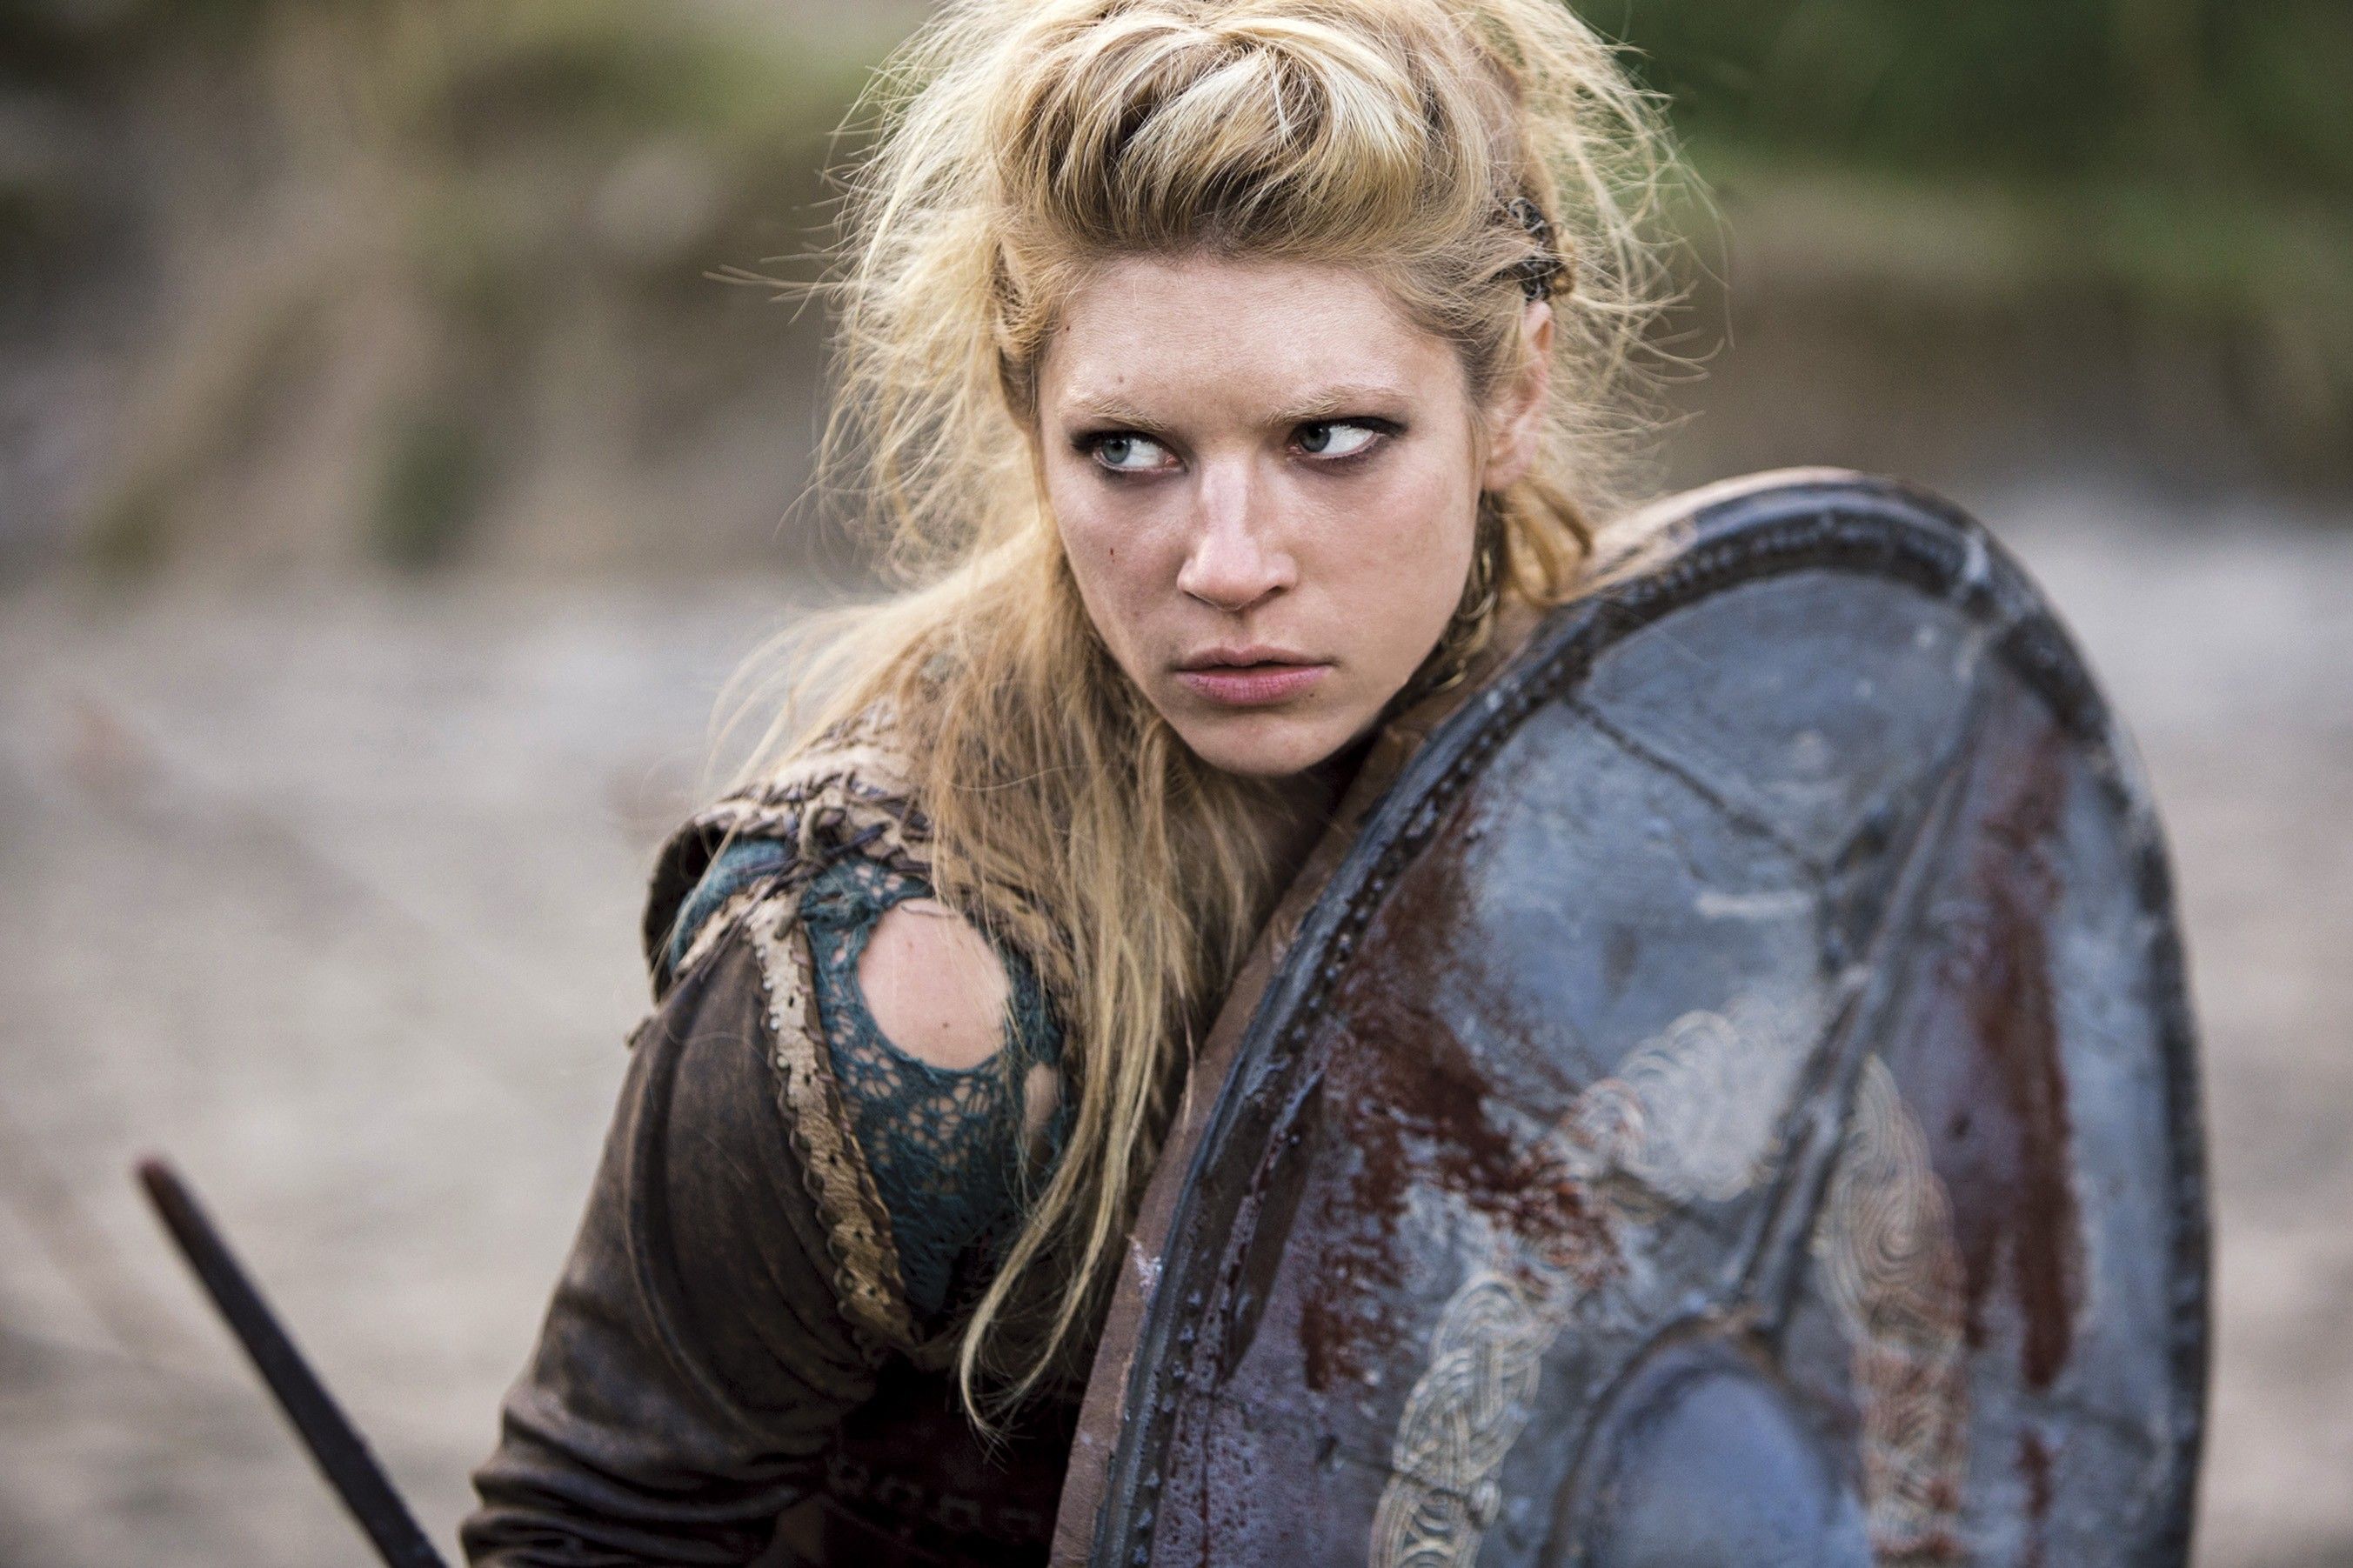 #Vikings, #women, #shield, #Katheryn Winnick, #warrior, #blonde, # Vikings (TV series), #Lagertha Lothbrok, #actress, wallpaper